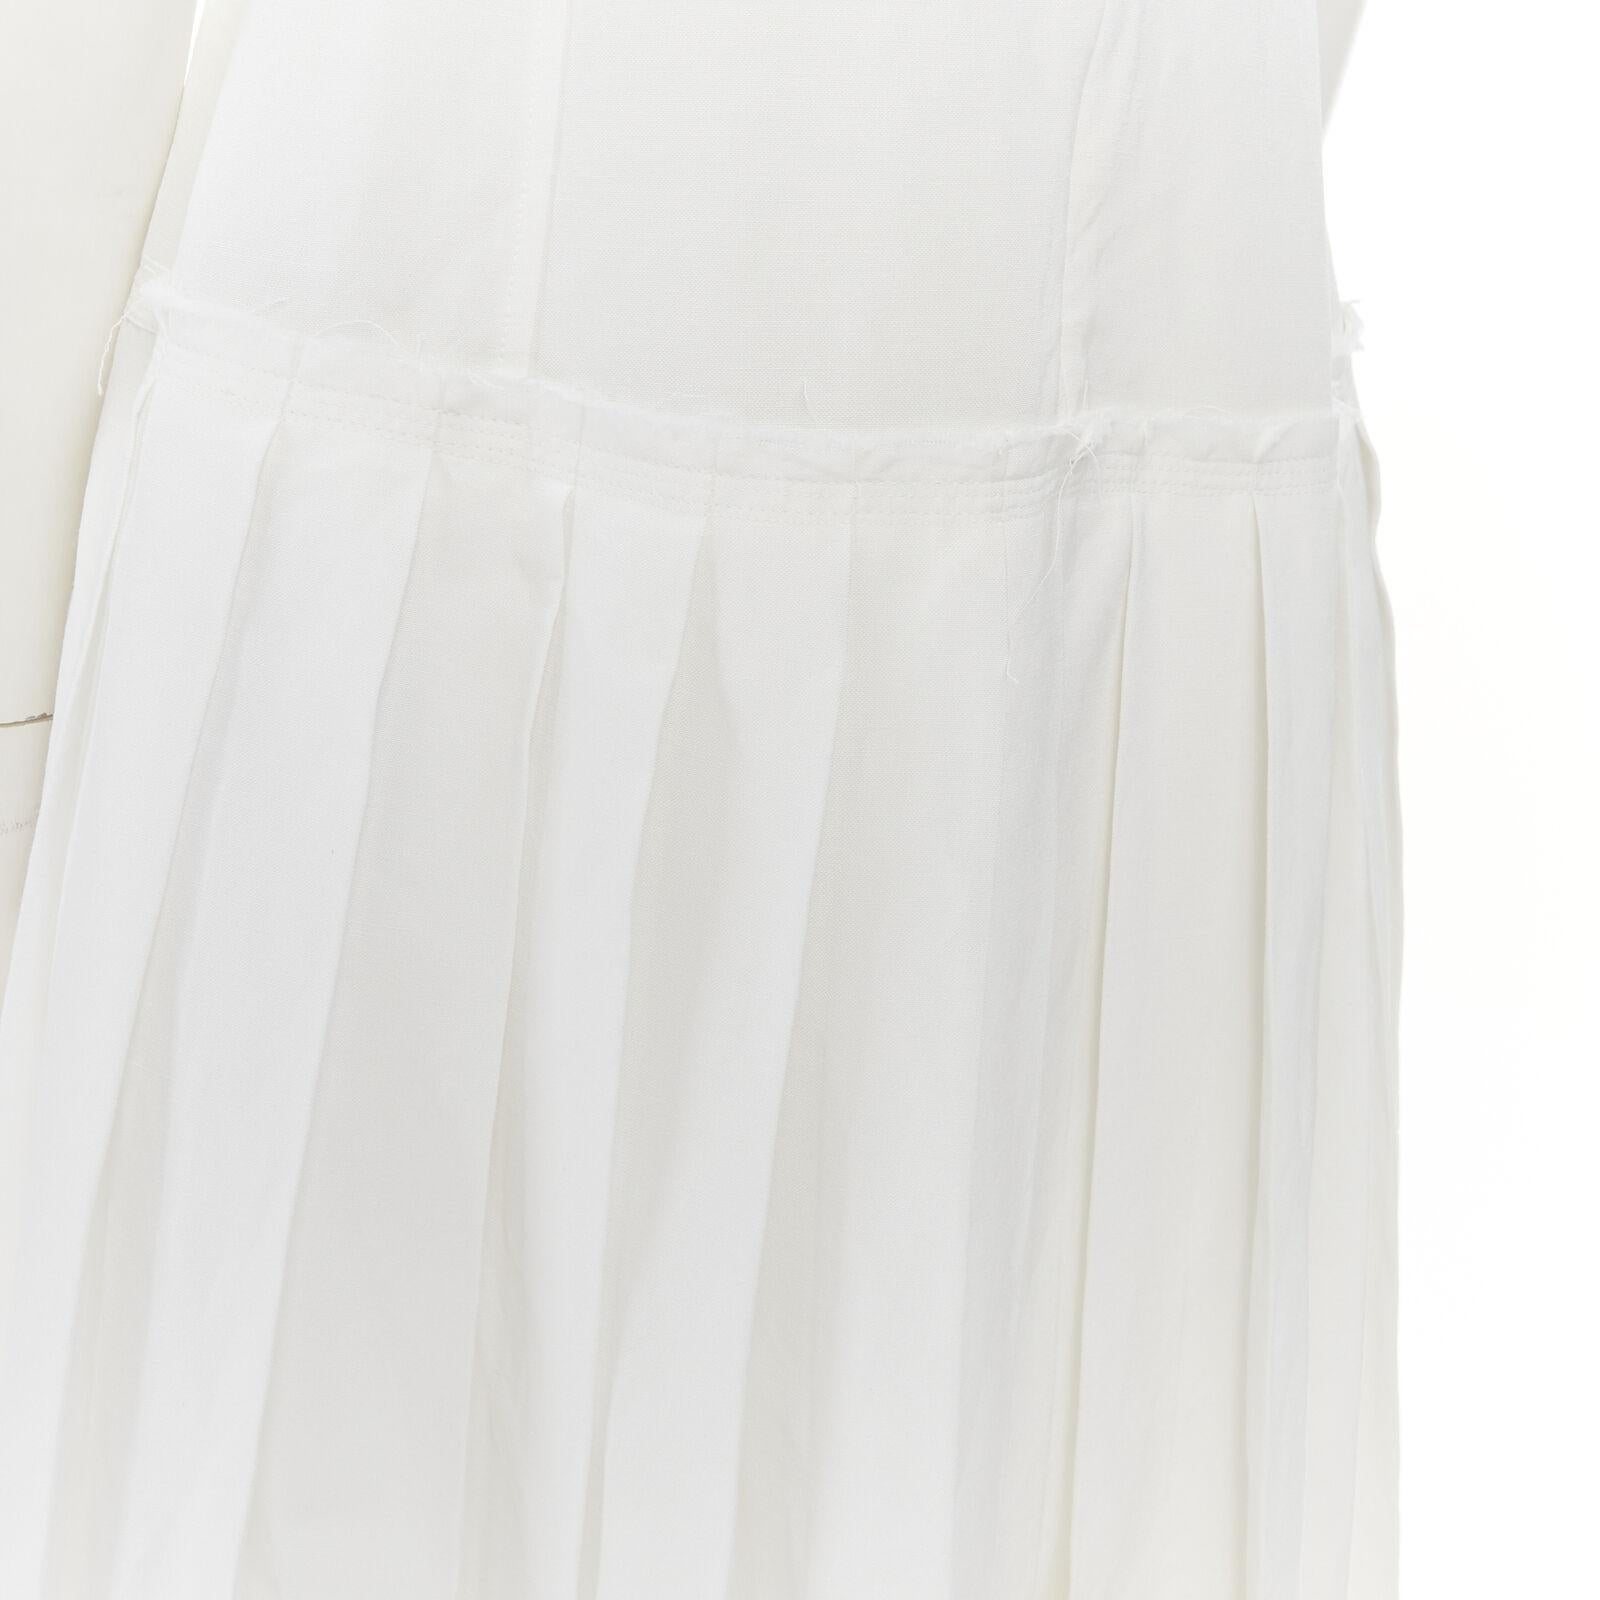 new CELINE PHOEBE PHILO 2017 Yves Klein body print cotton dress FR34 XS 1